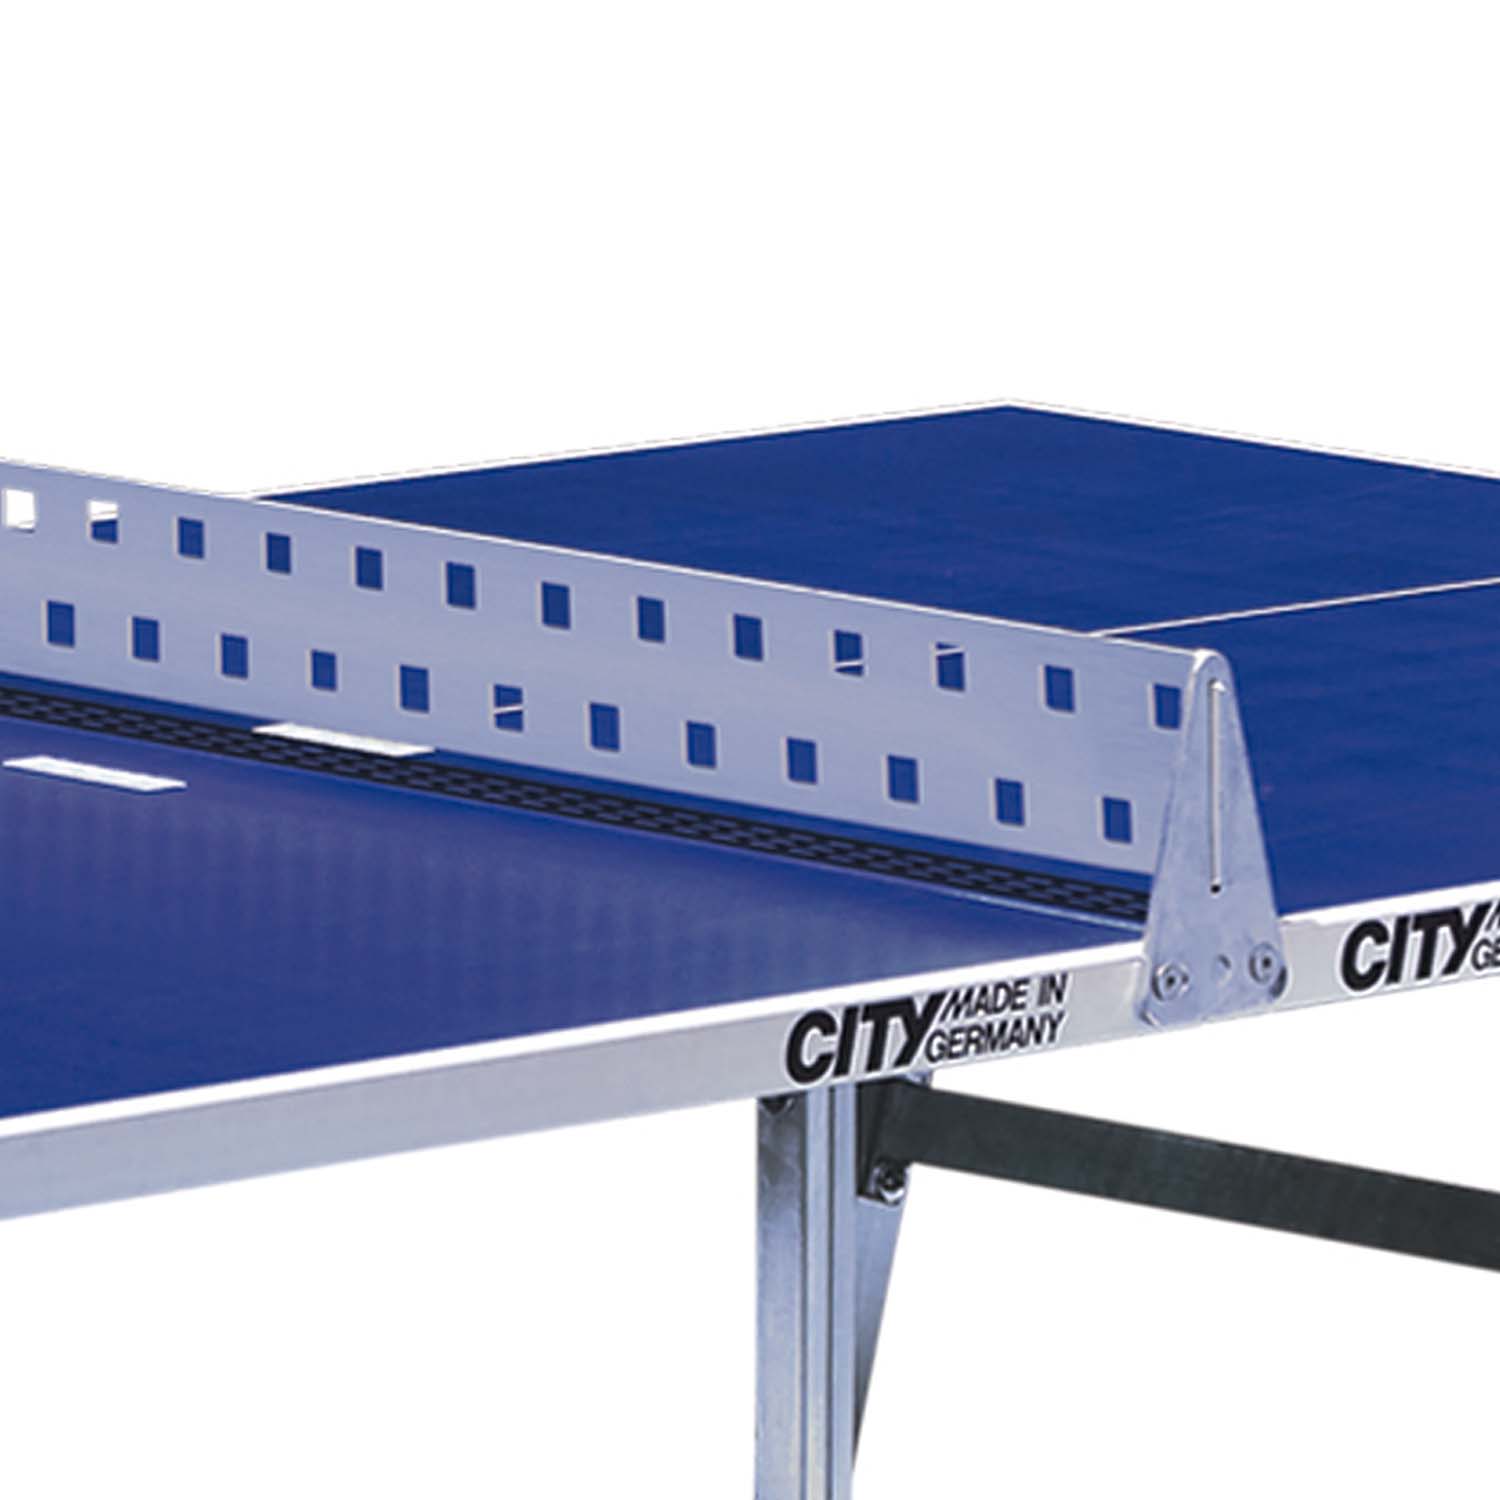 Joola table tennis table city